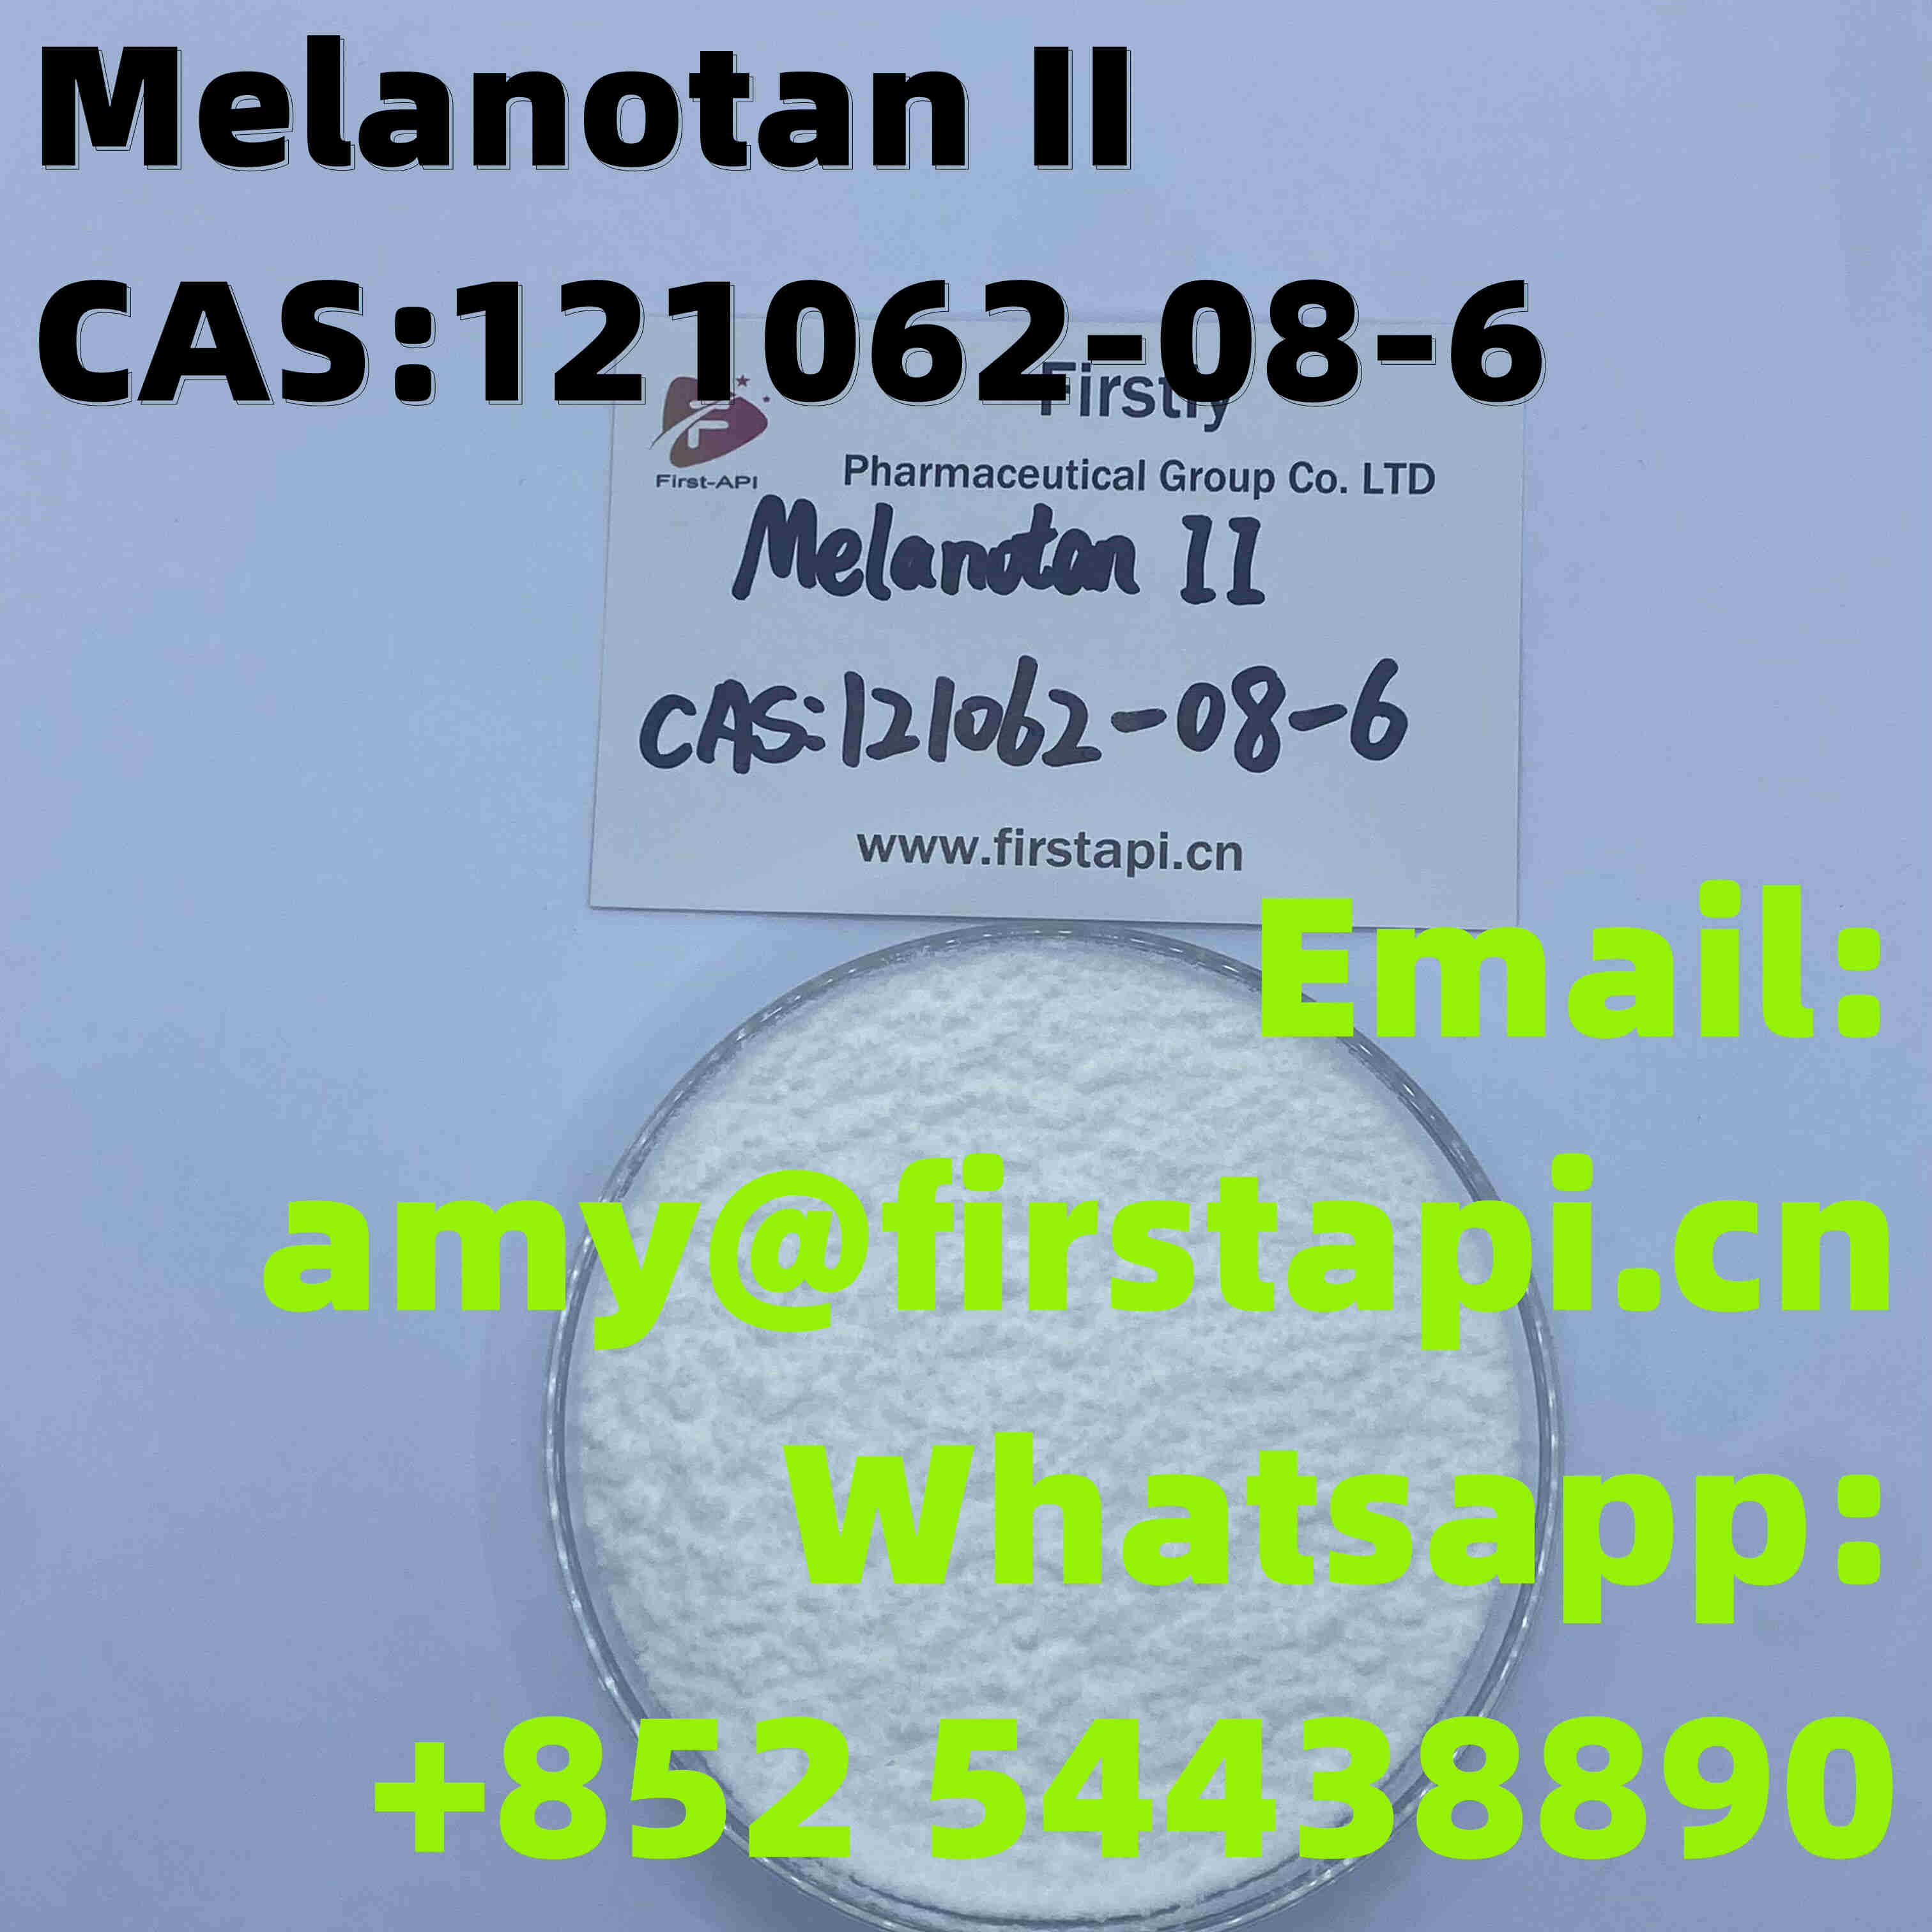 CAS No.:	121062-08-6,Whatsapp:+852 54438890,Chemical Name:	Melanotan II,made in china - photo